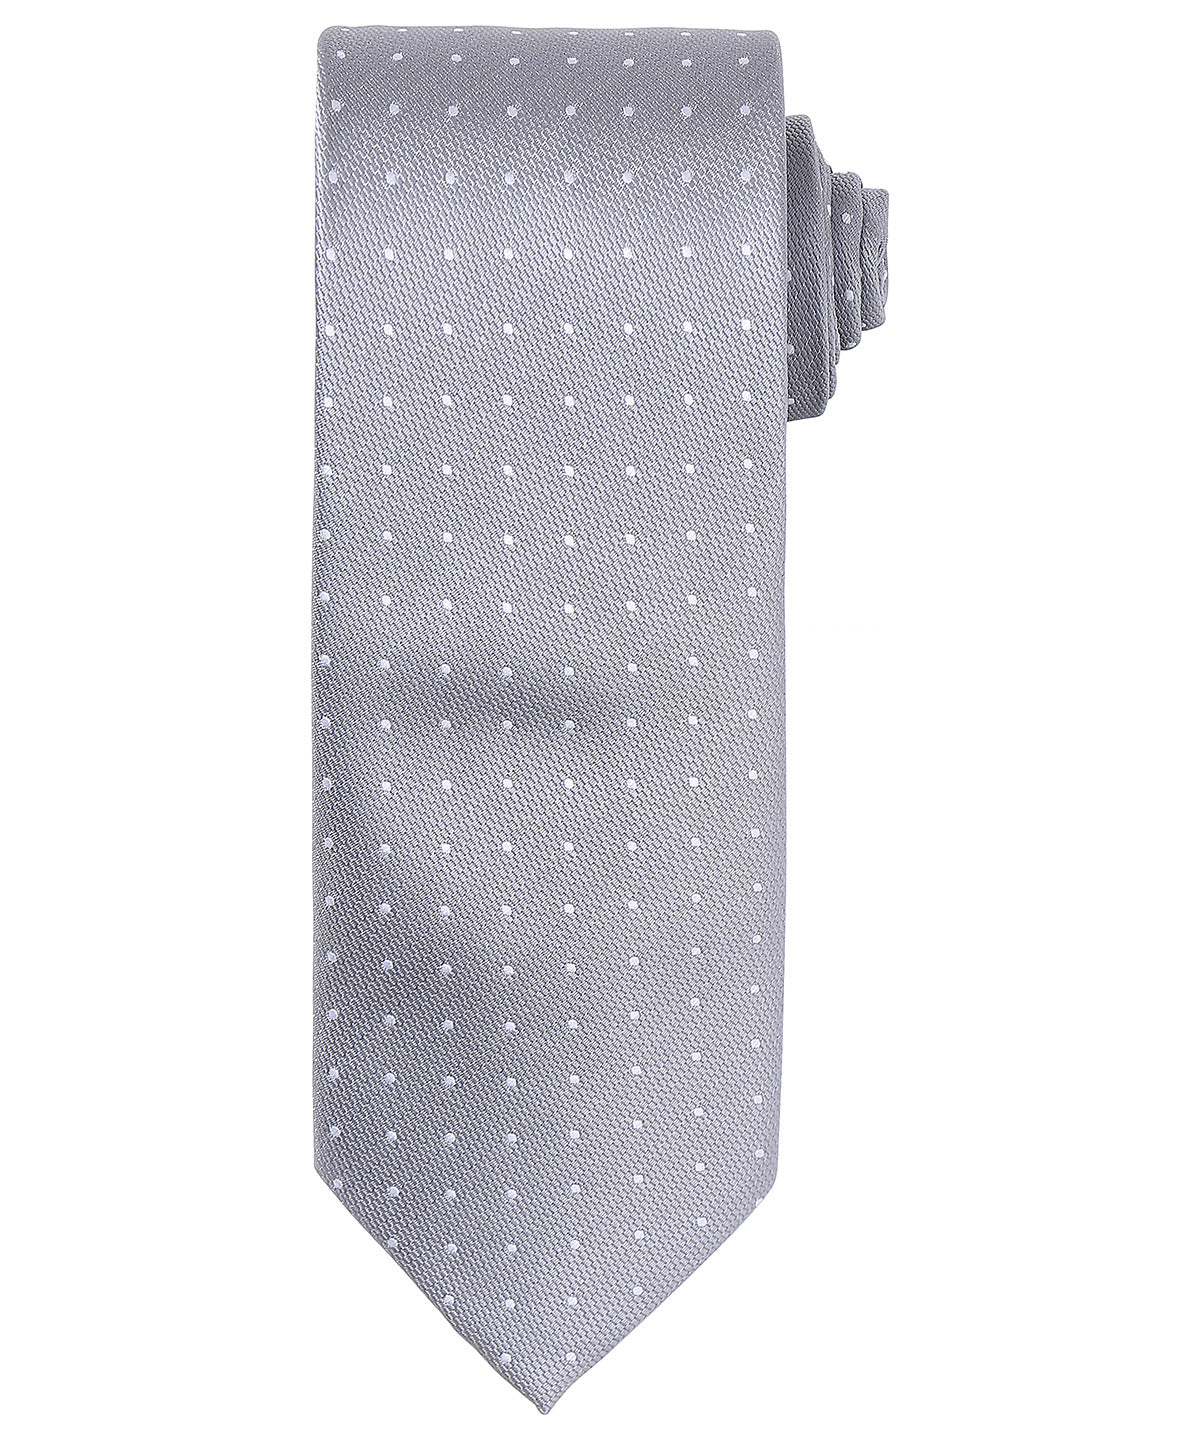 Micro dot tie - Premier Collection